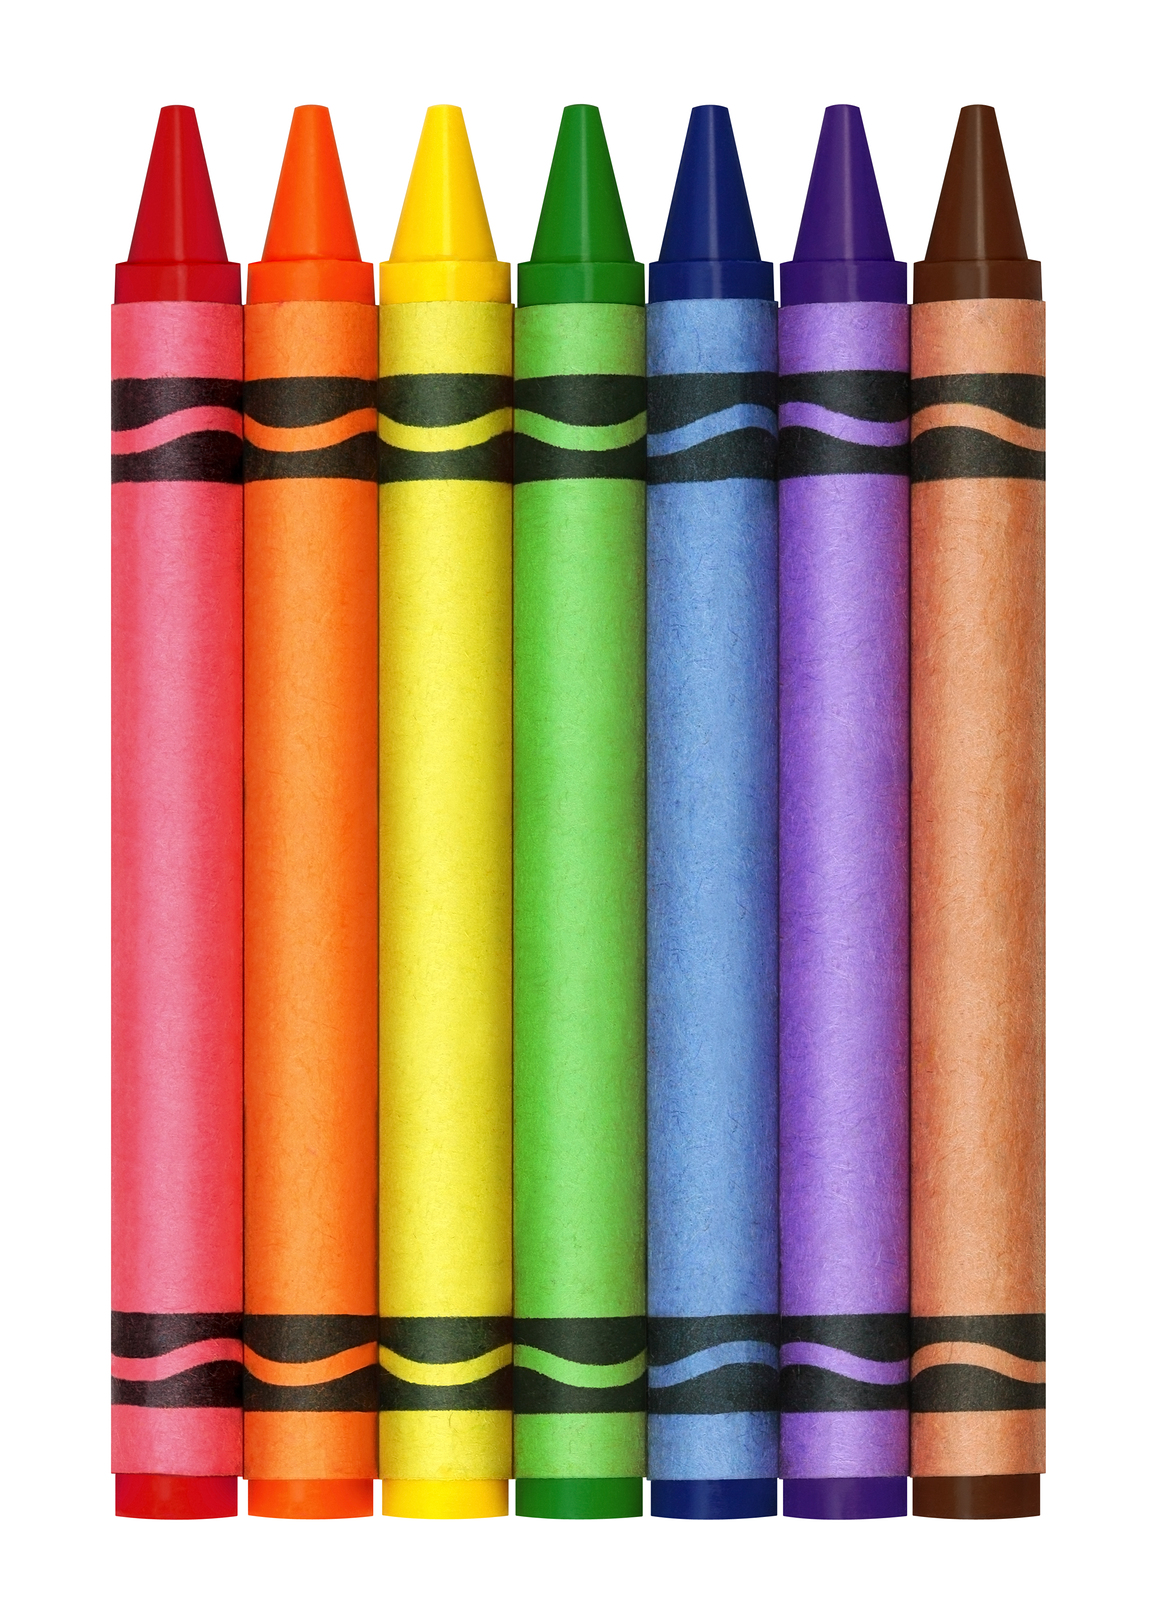 crayons clipart coloured crayon